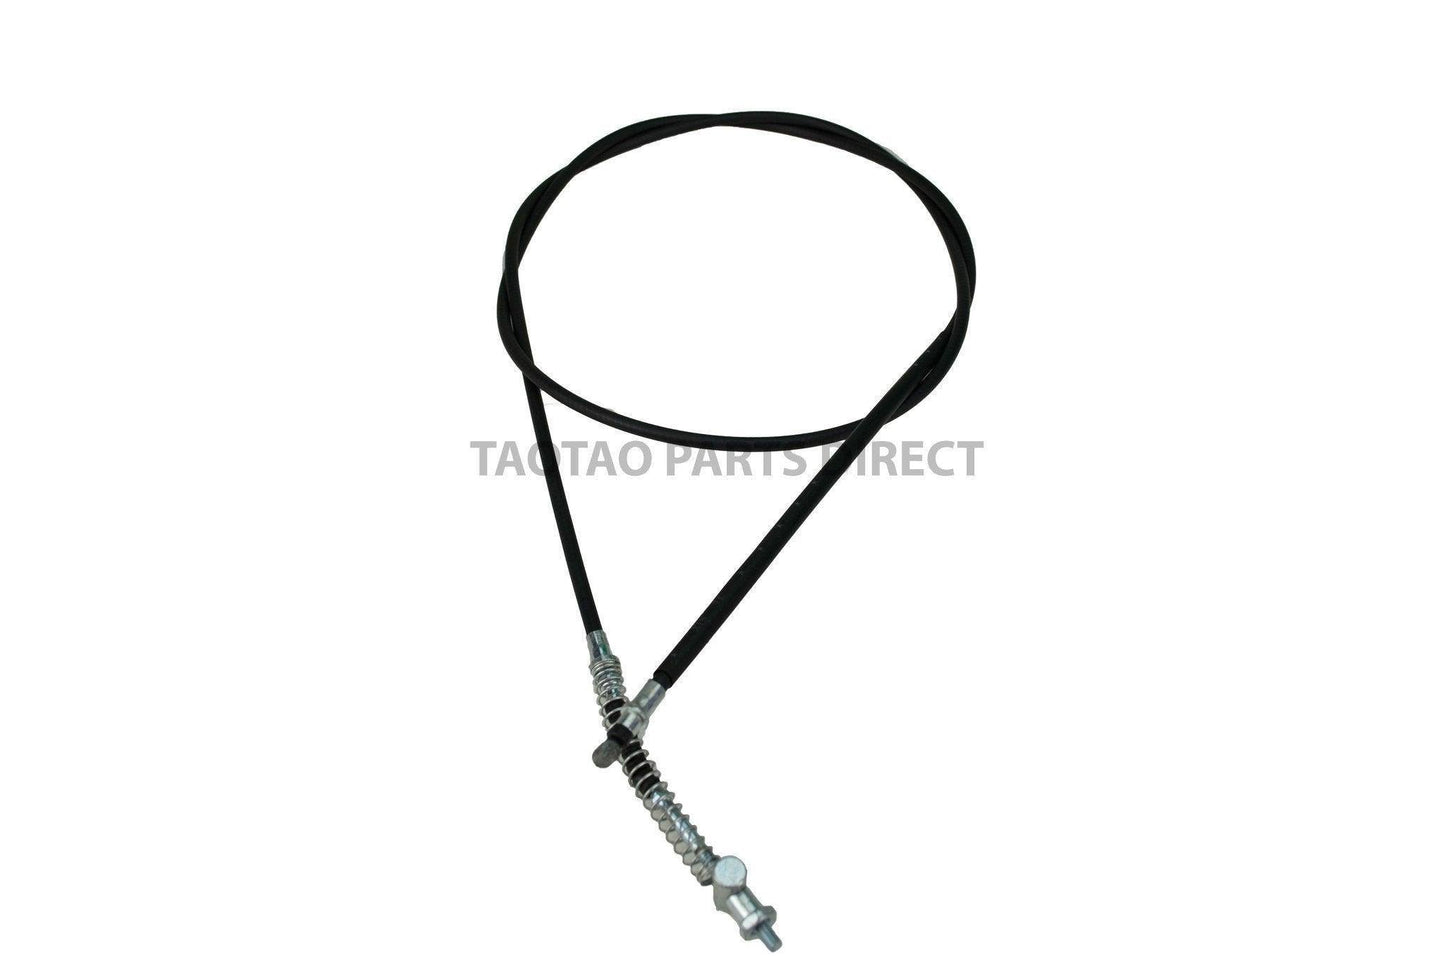 CY50A Rear Brake Cable - TaoTaoPartsDirect.com